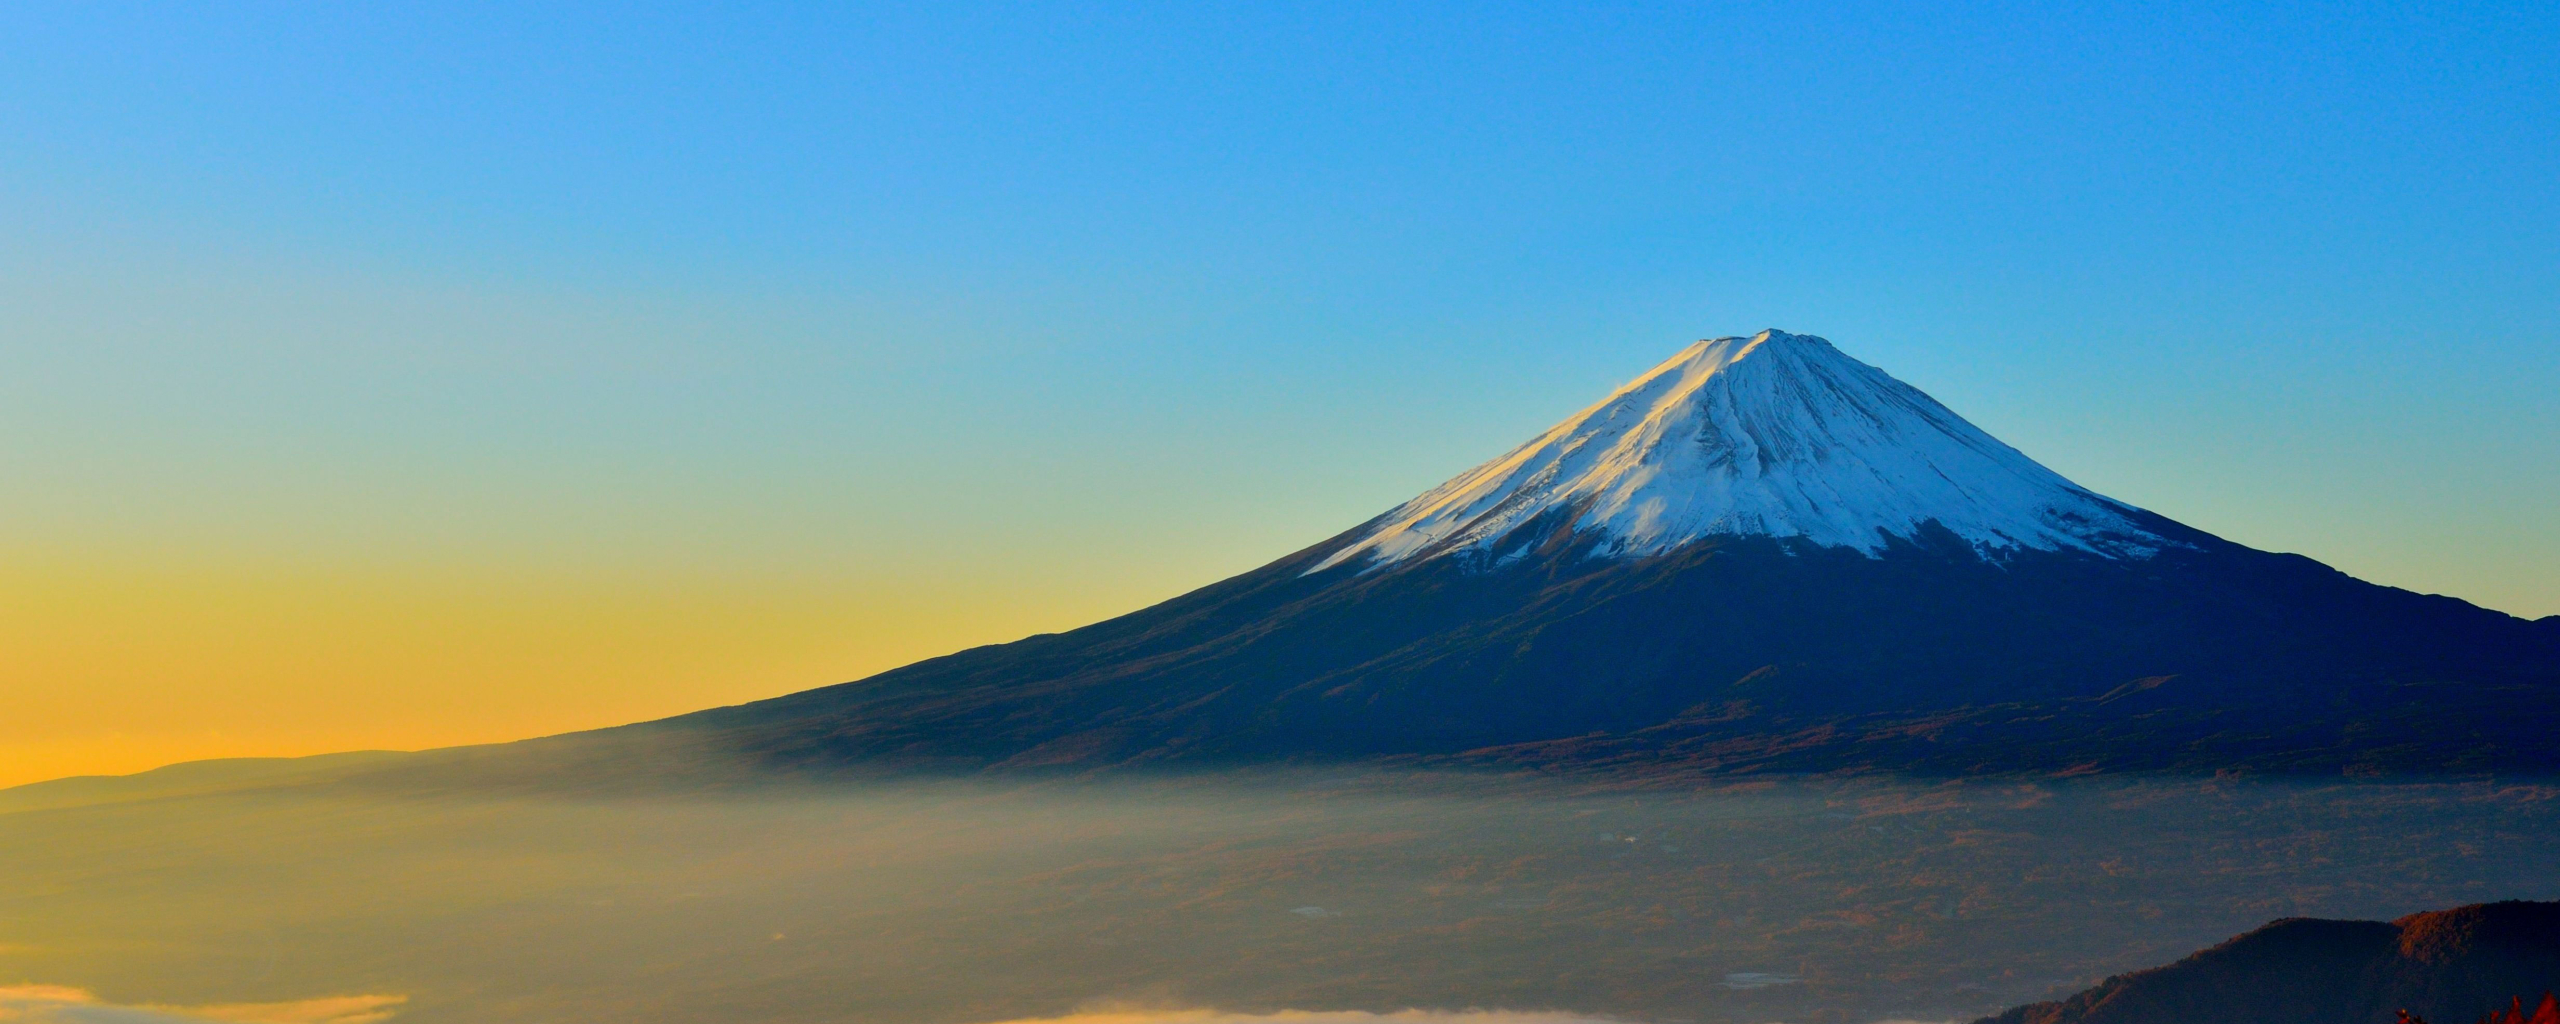  Mount Fuji Sunrise  HD 4K Wallpaper